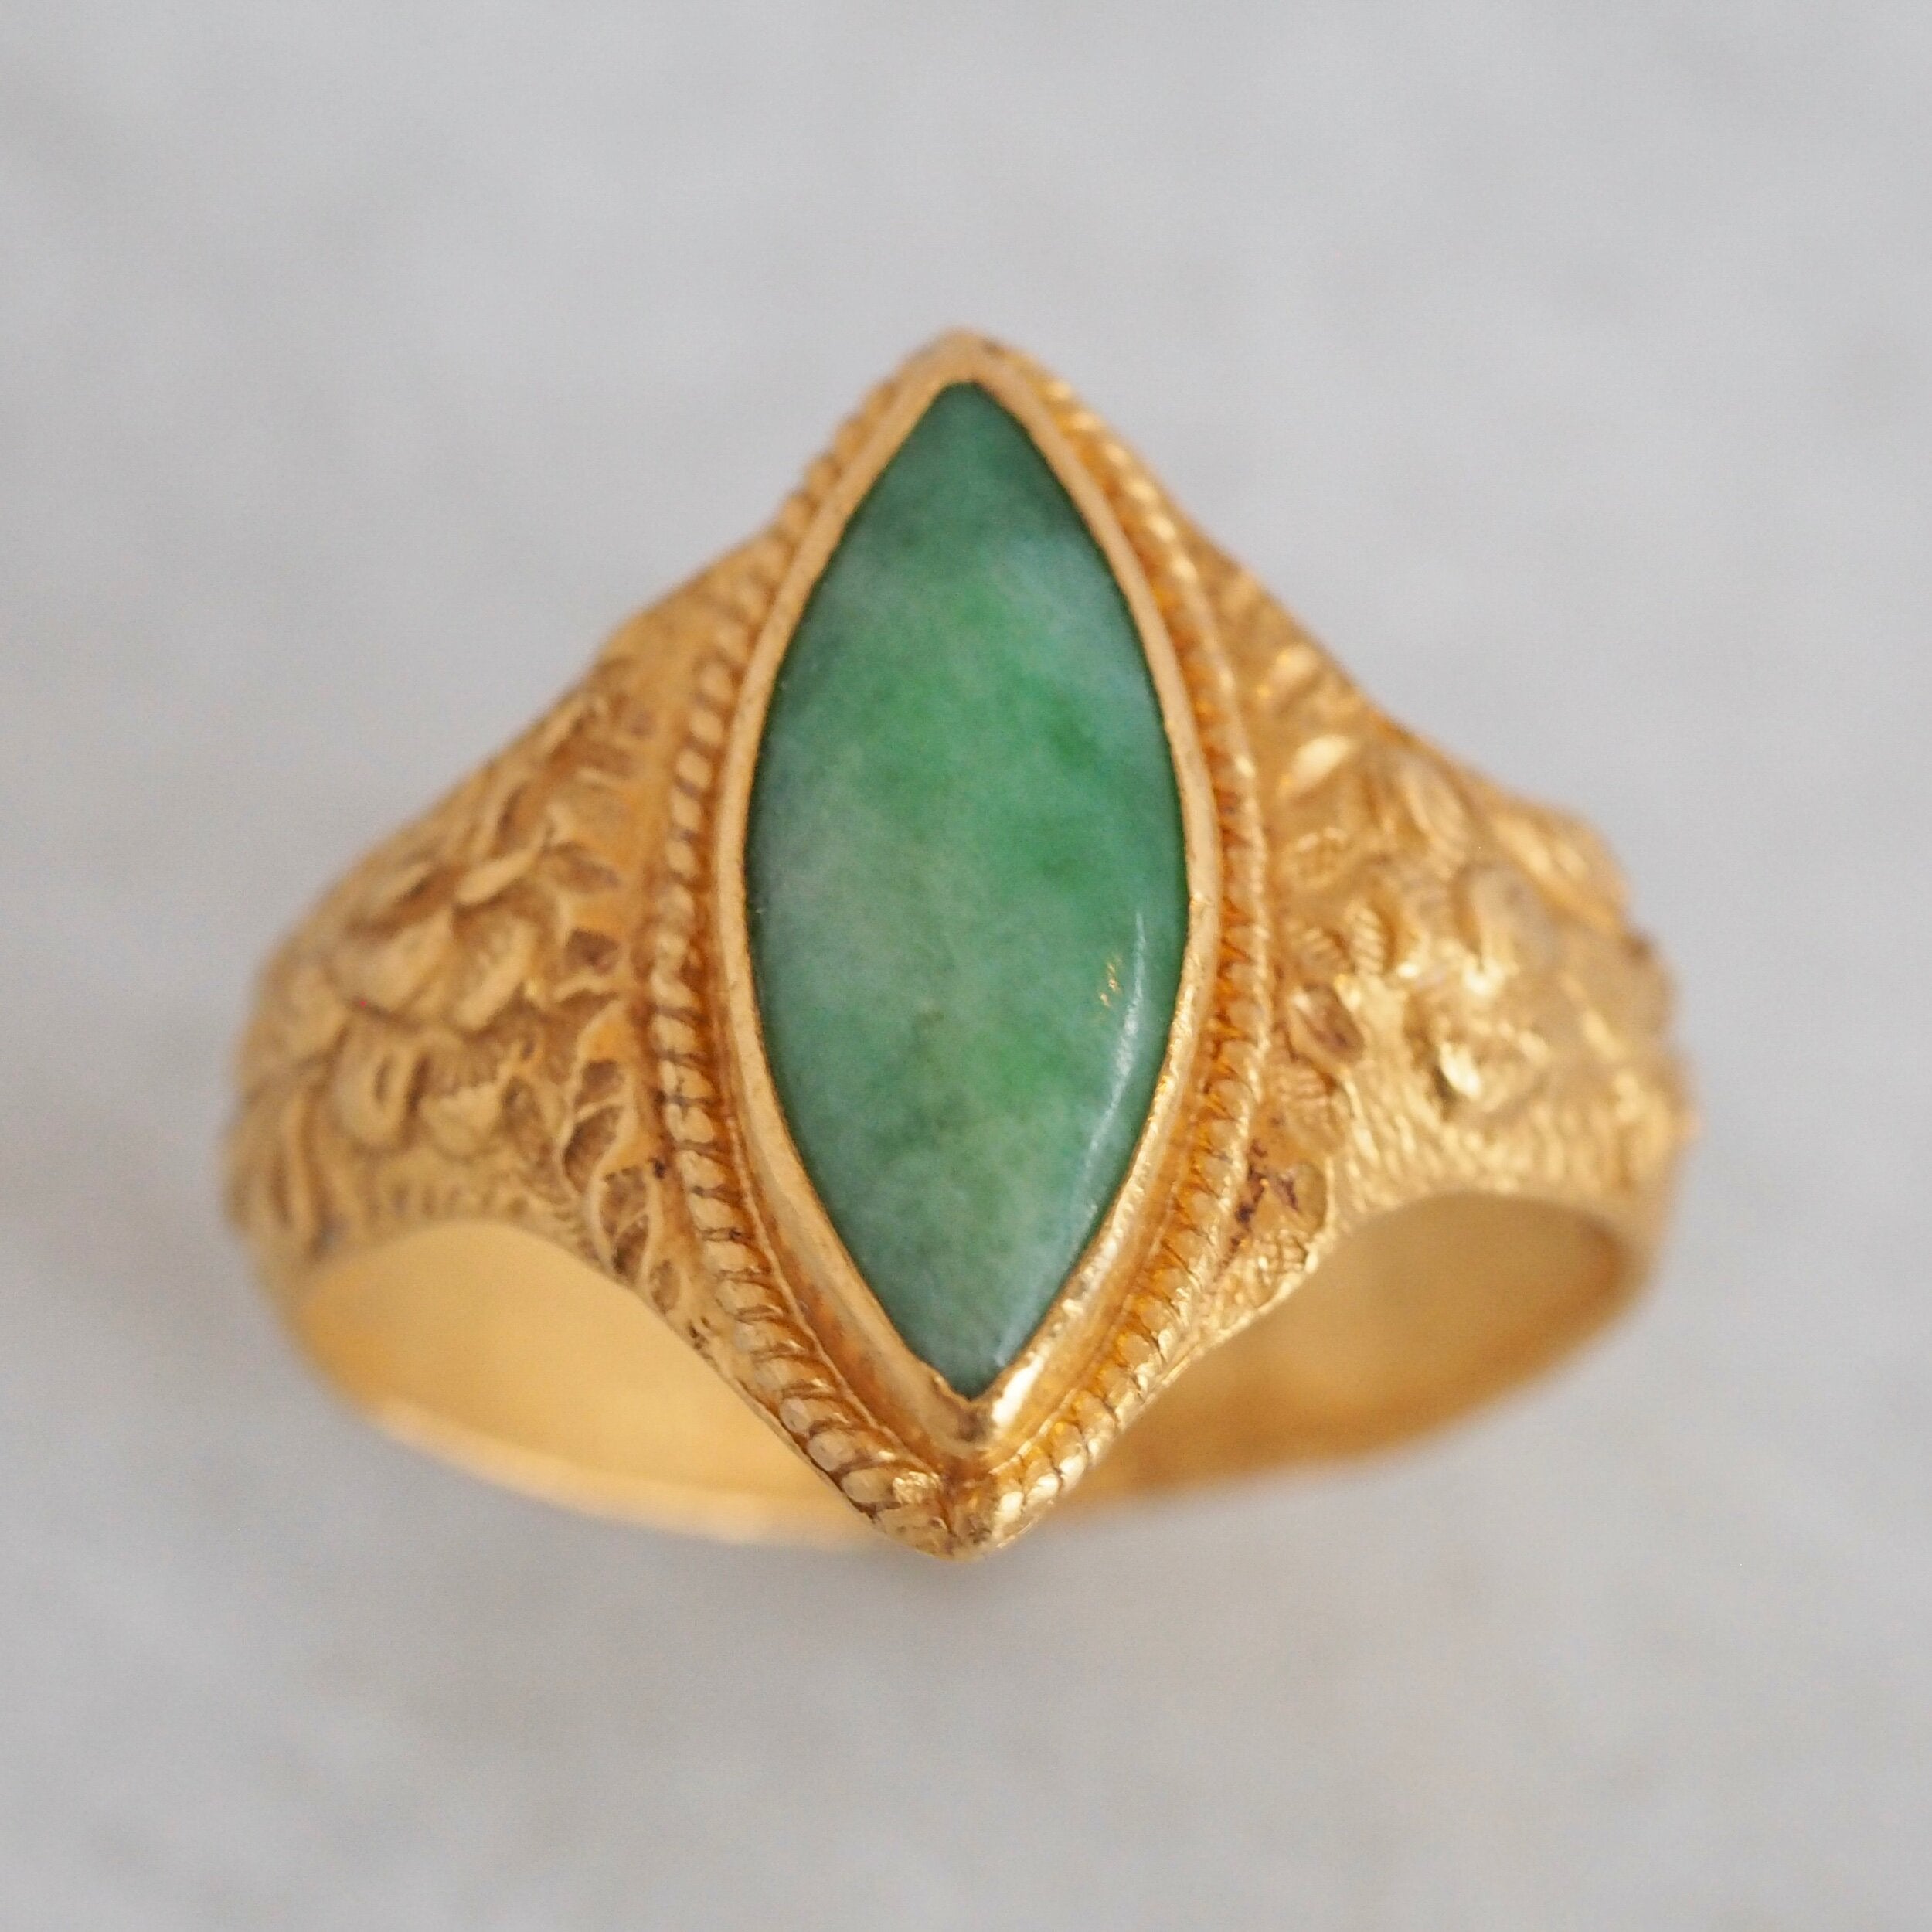 Antique Chinese 22k/24k Gold Jade Navette Ring